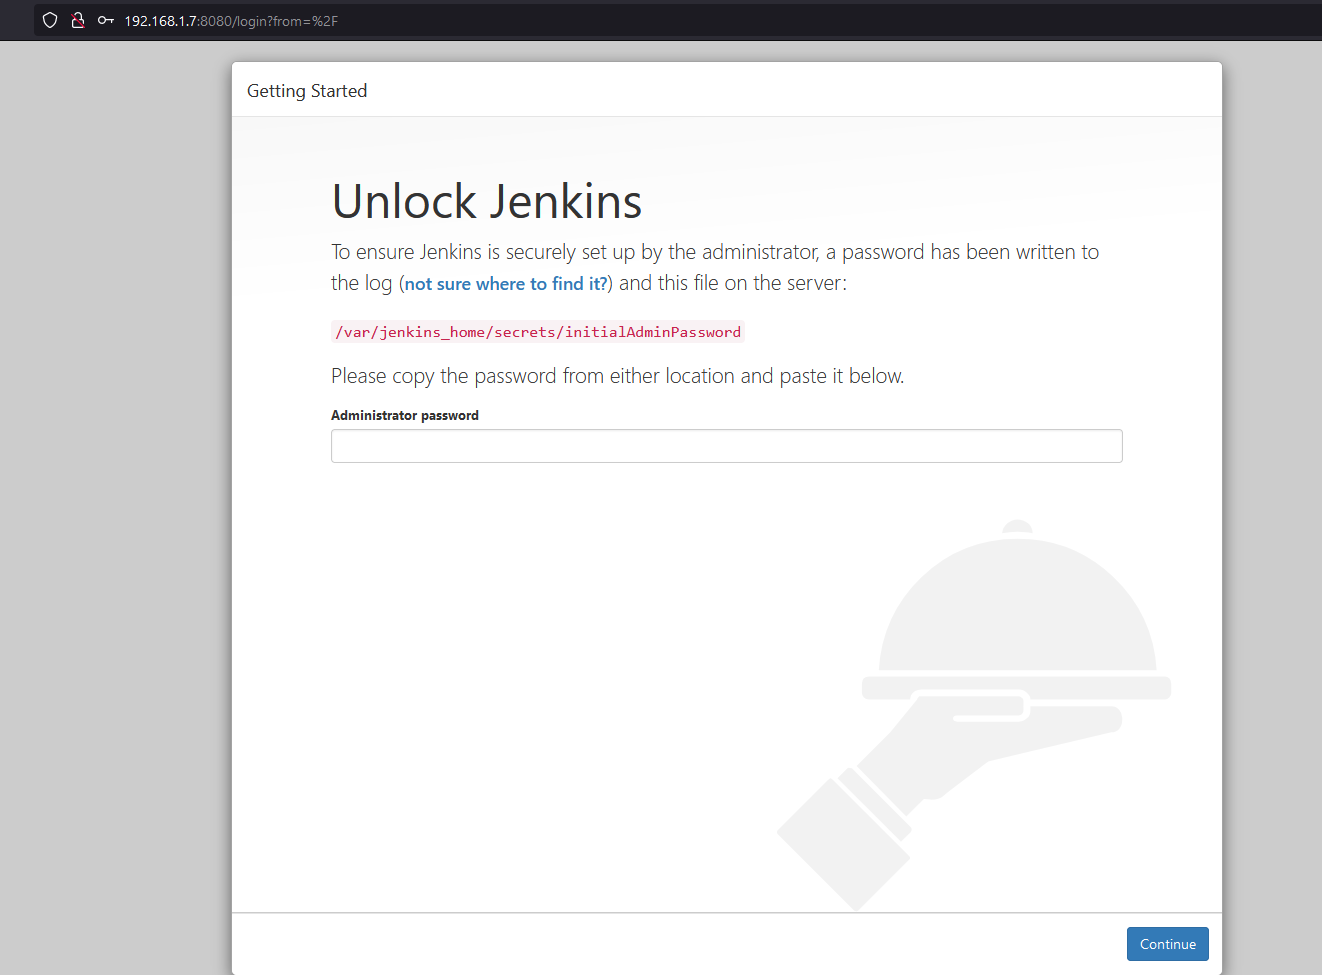 Jenkins URL